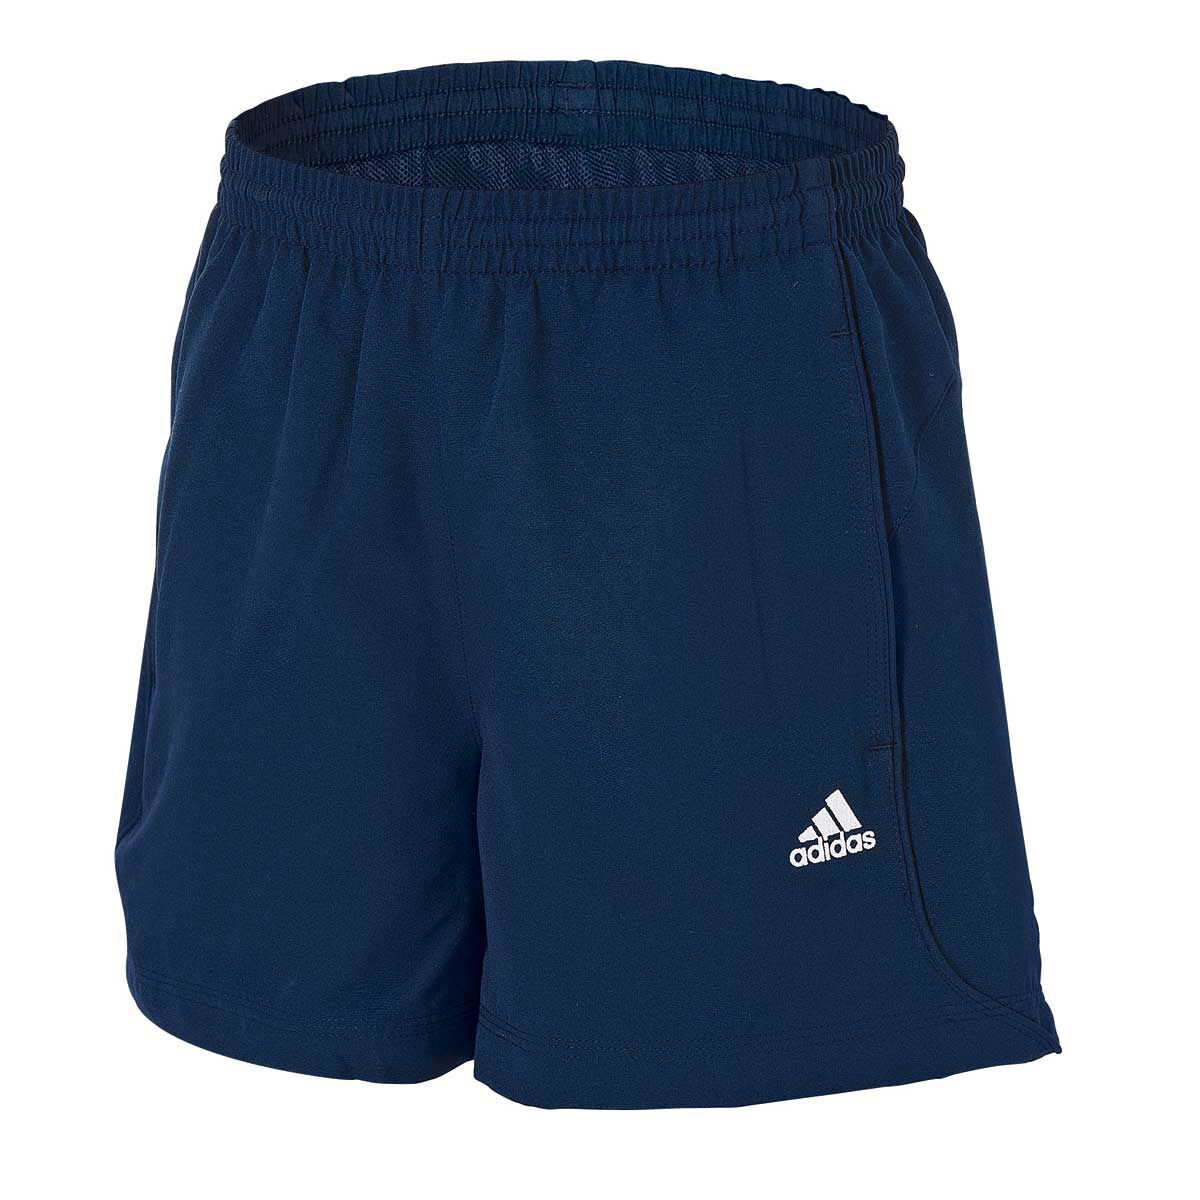 boys navy adidas shorts